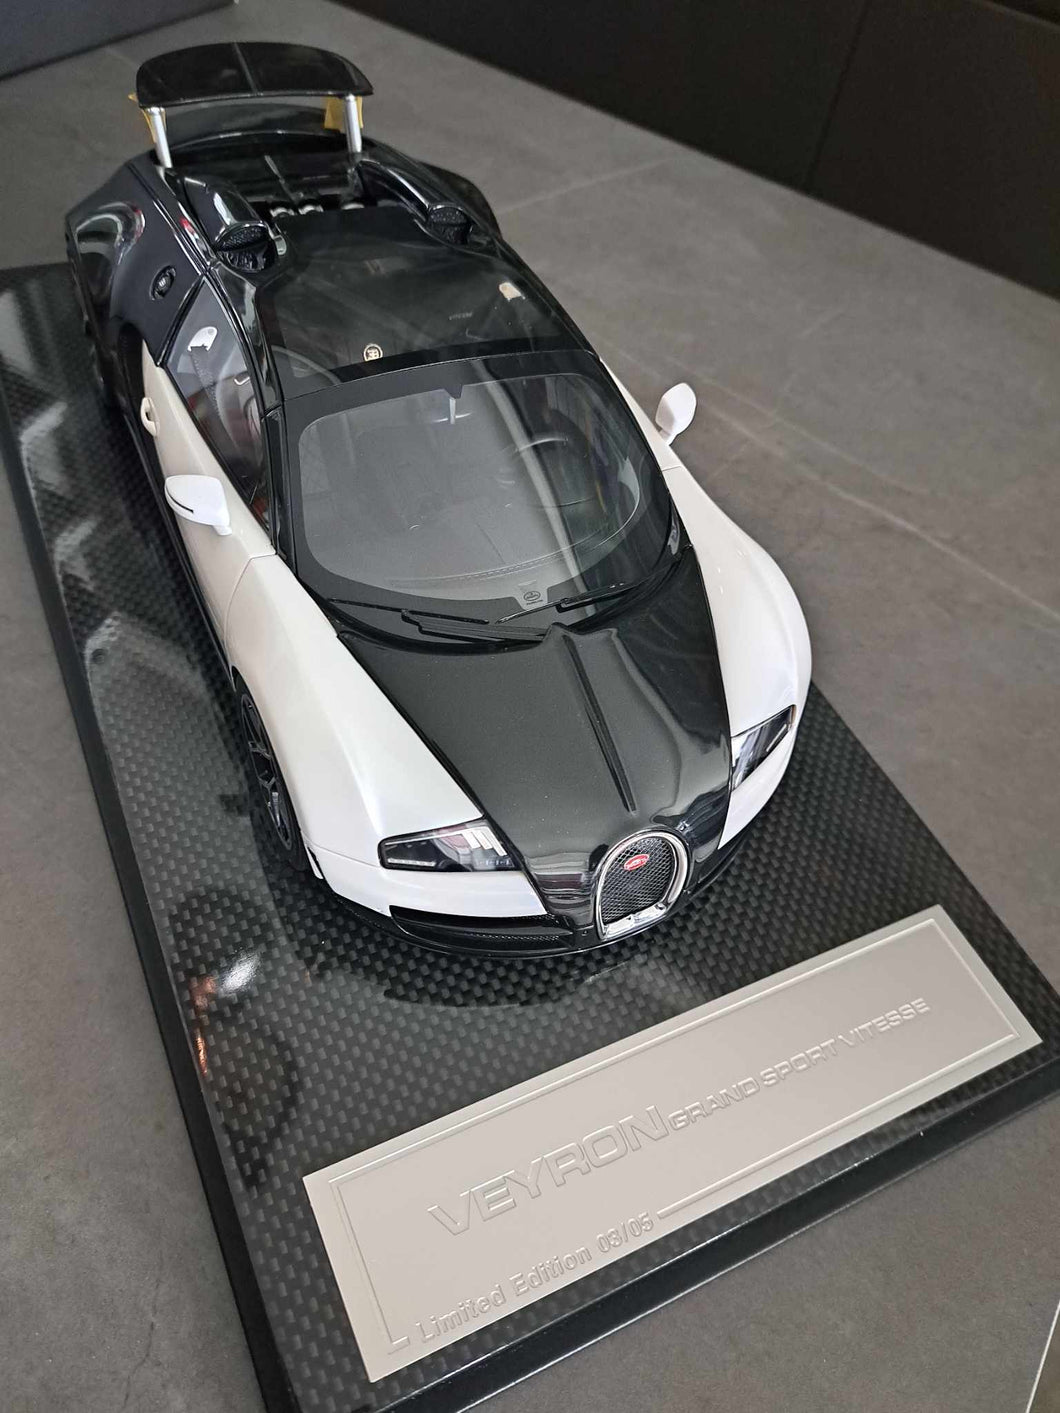 Bugatti Veyron Grand Sport Vitesse - white and black on carbon base - 1:18